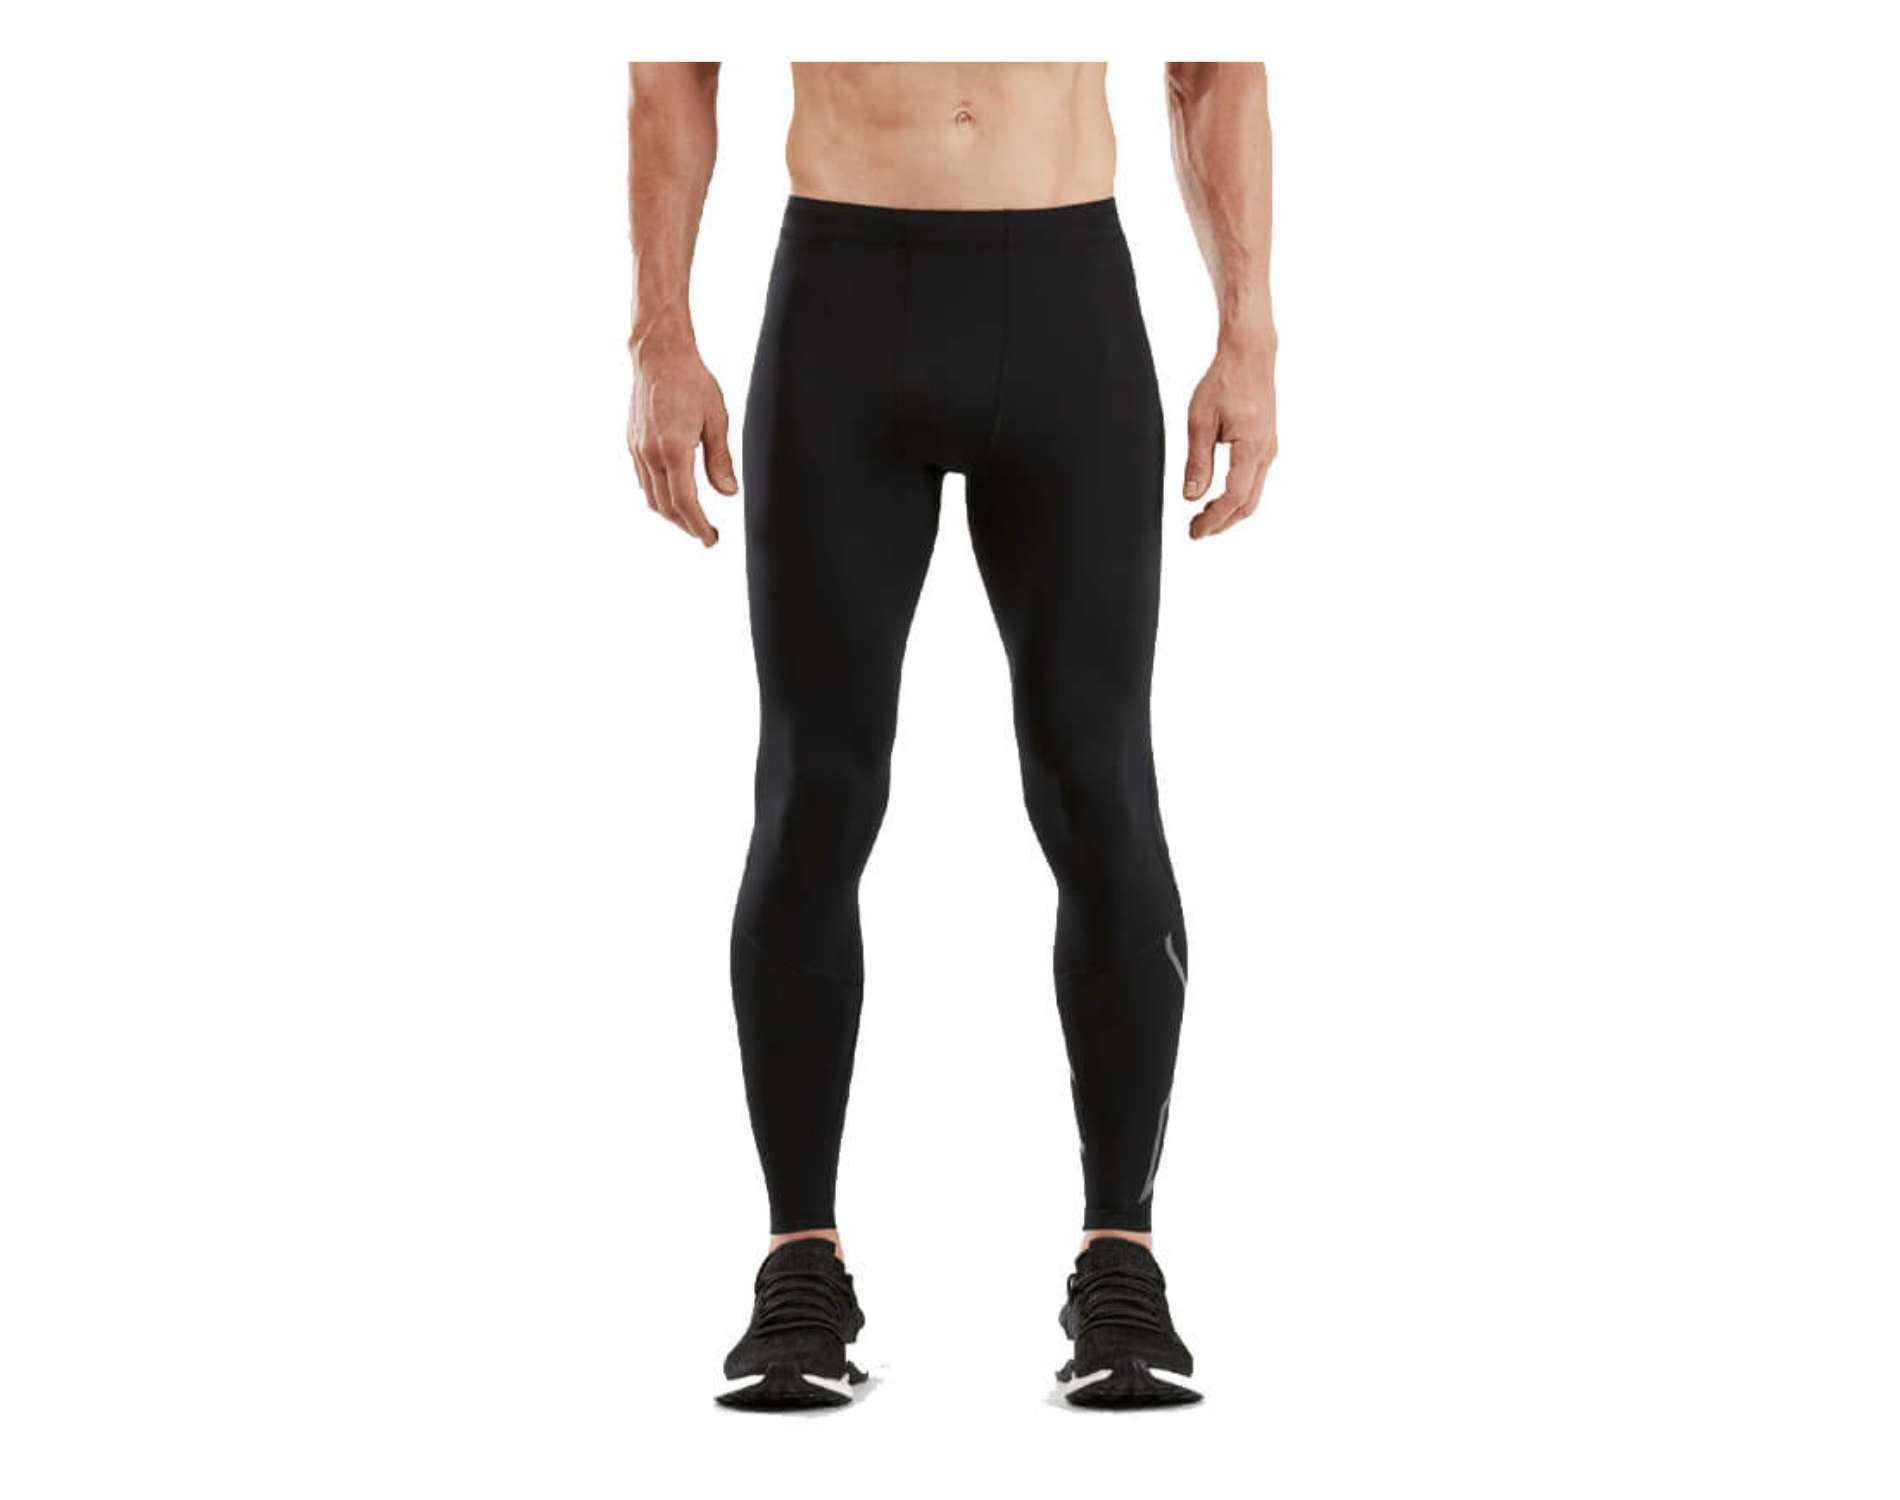 2XU Run compression tights for men in small size and black reflective colour